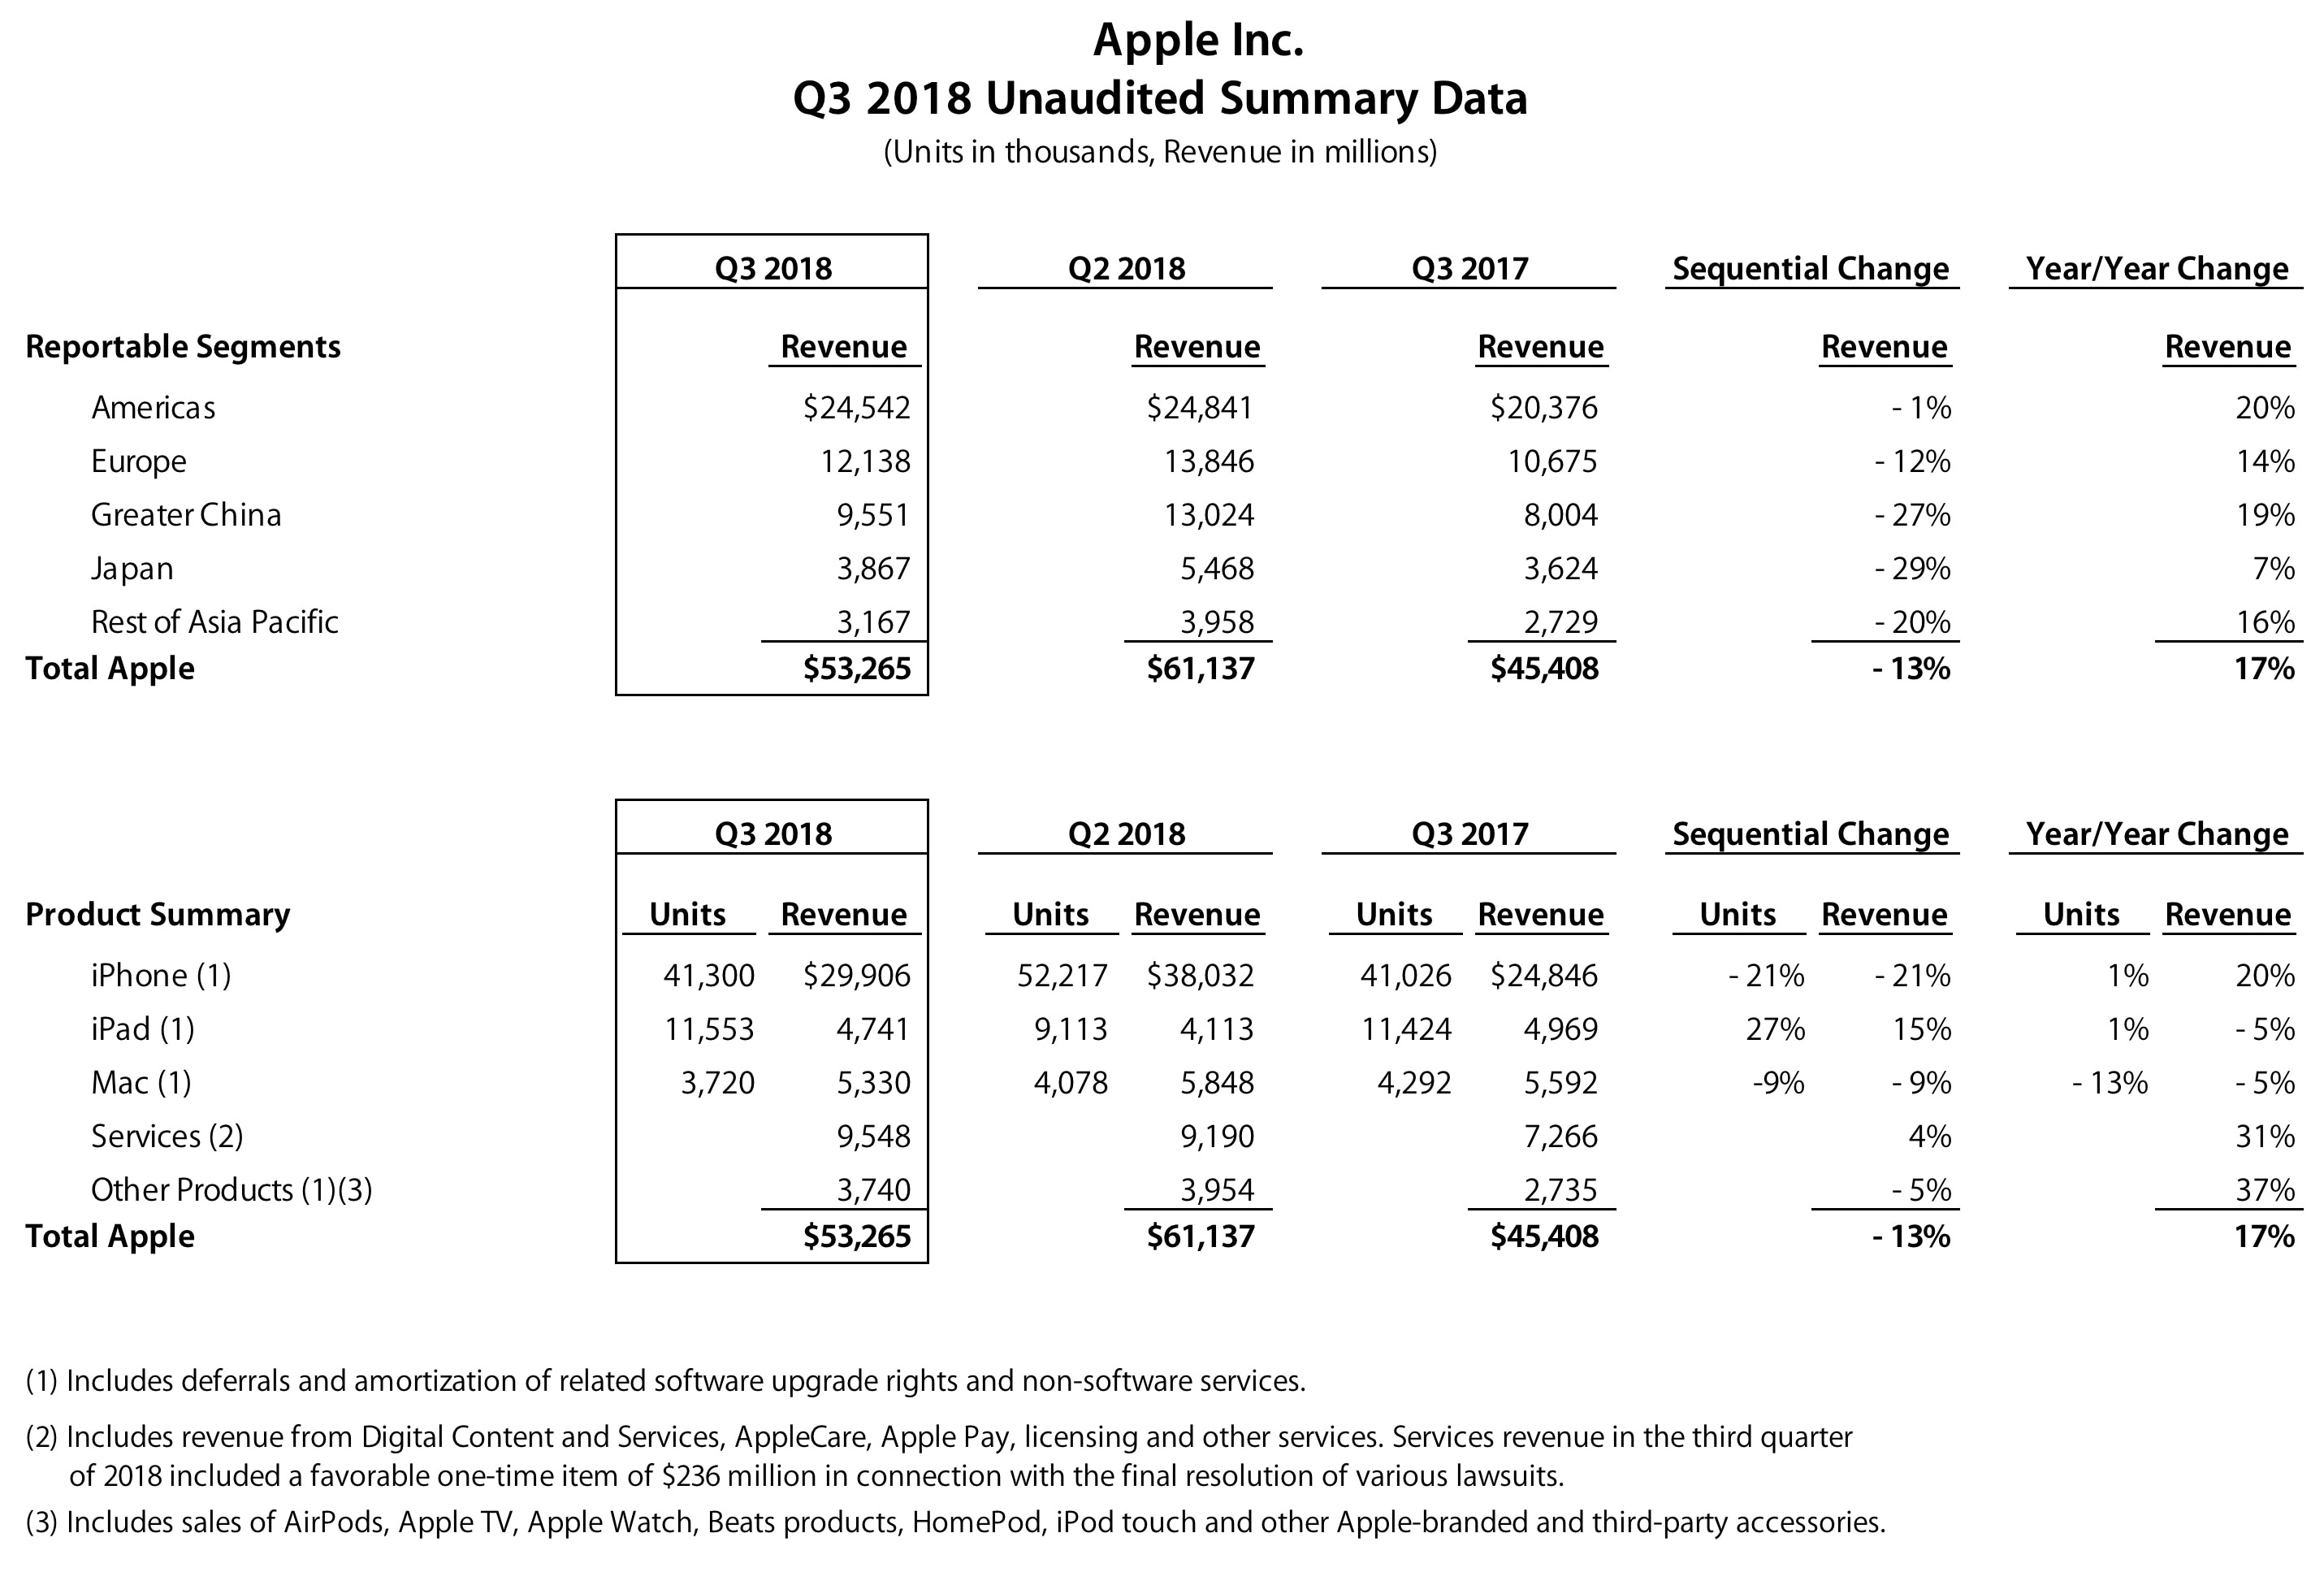 Apple FQ3 2018 numbers